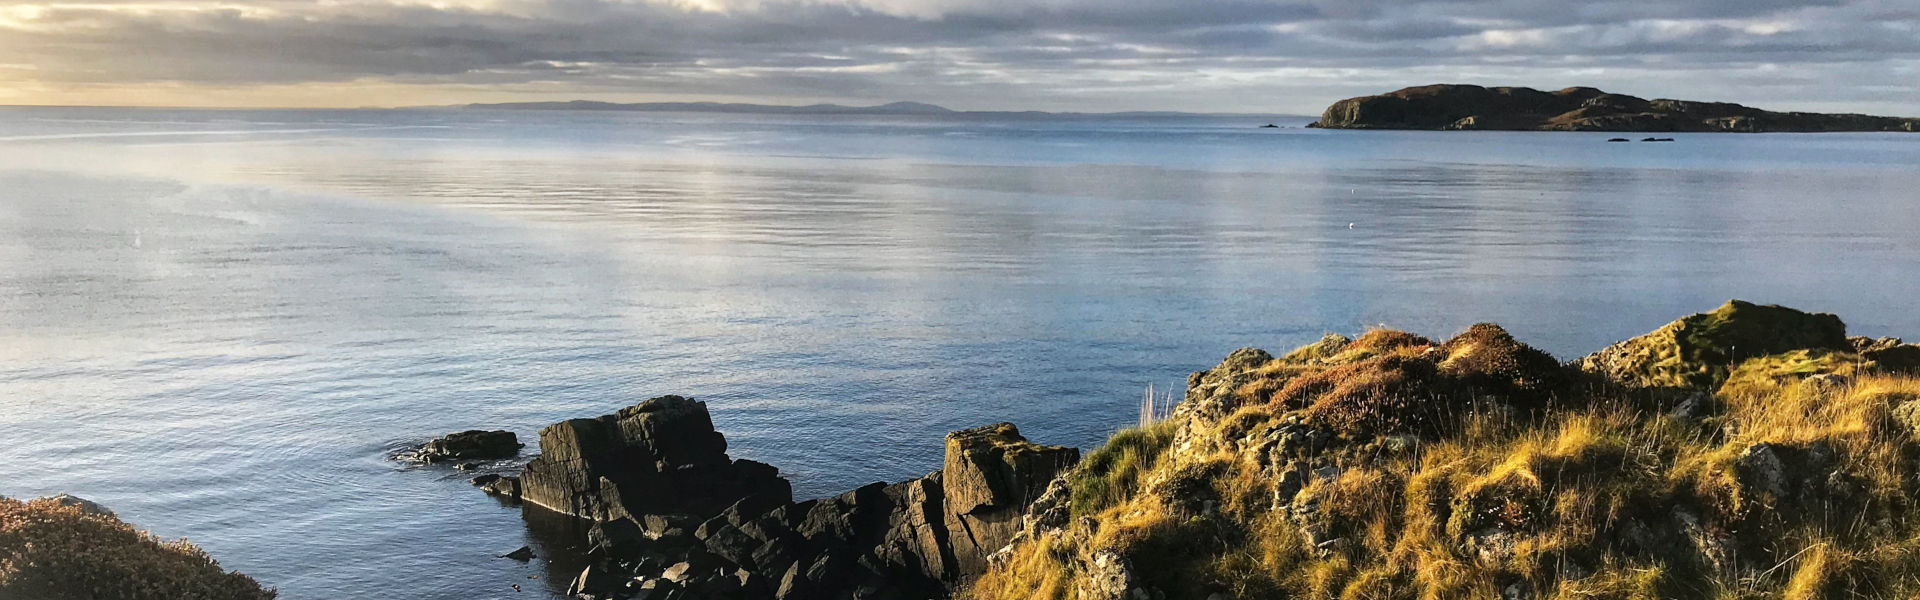 The rugged coastline of Islay in Scotland